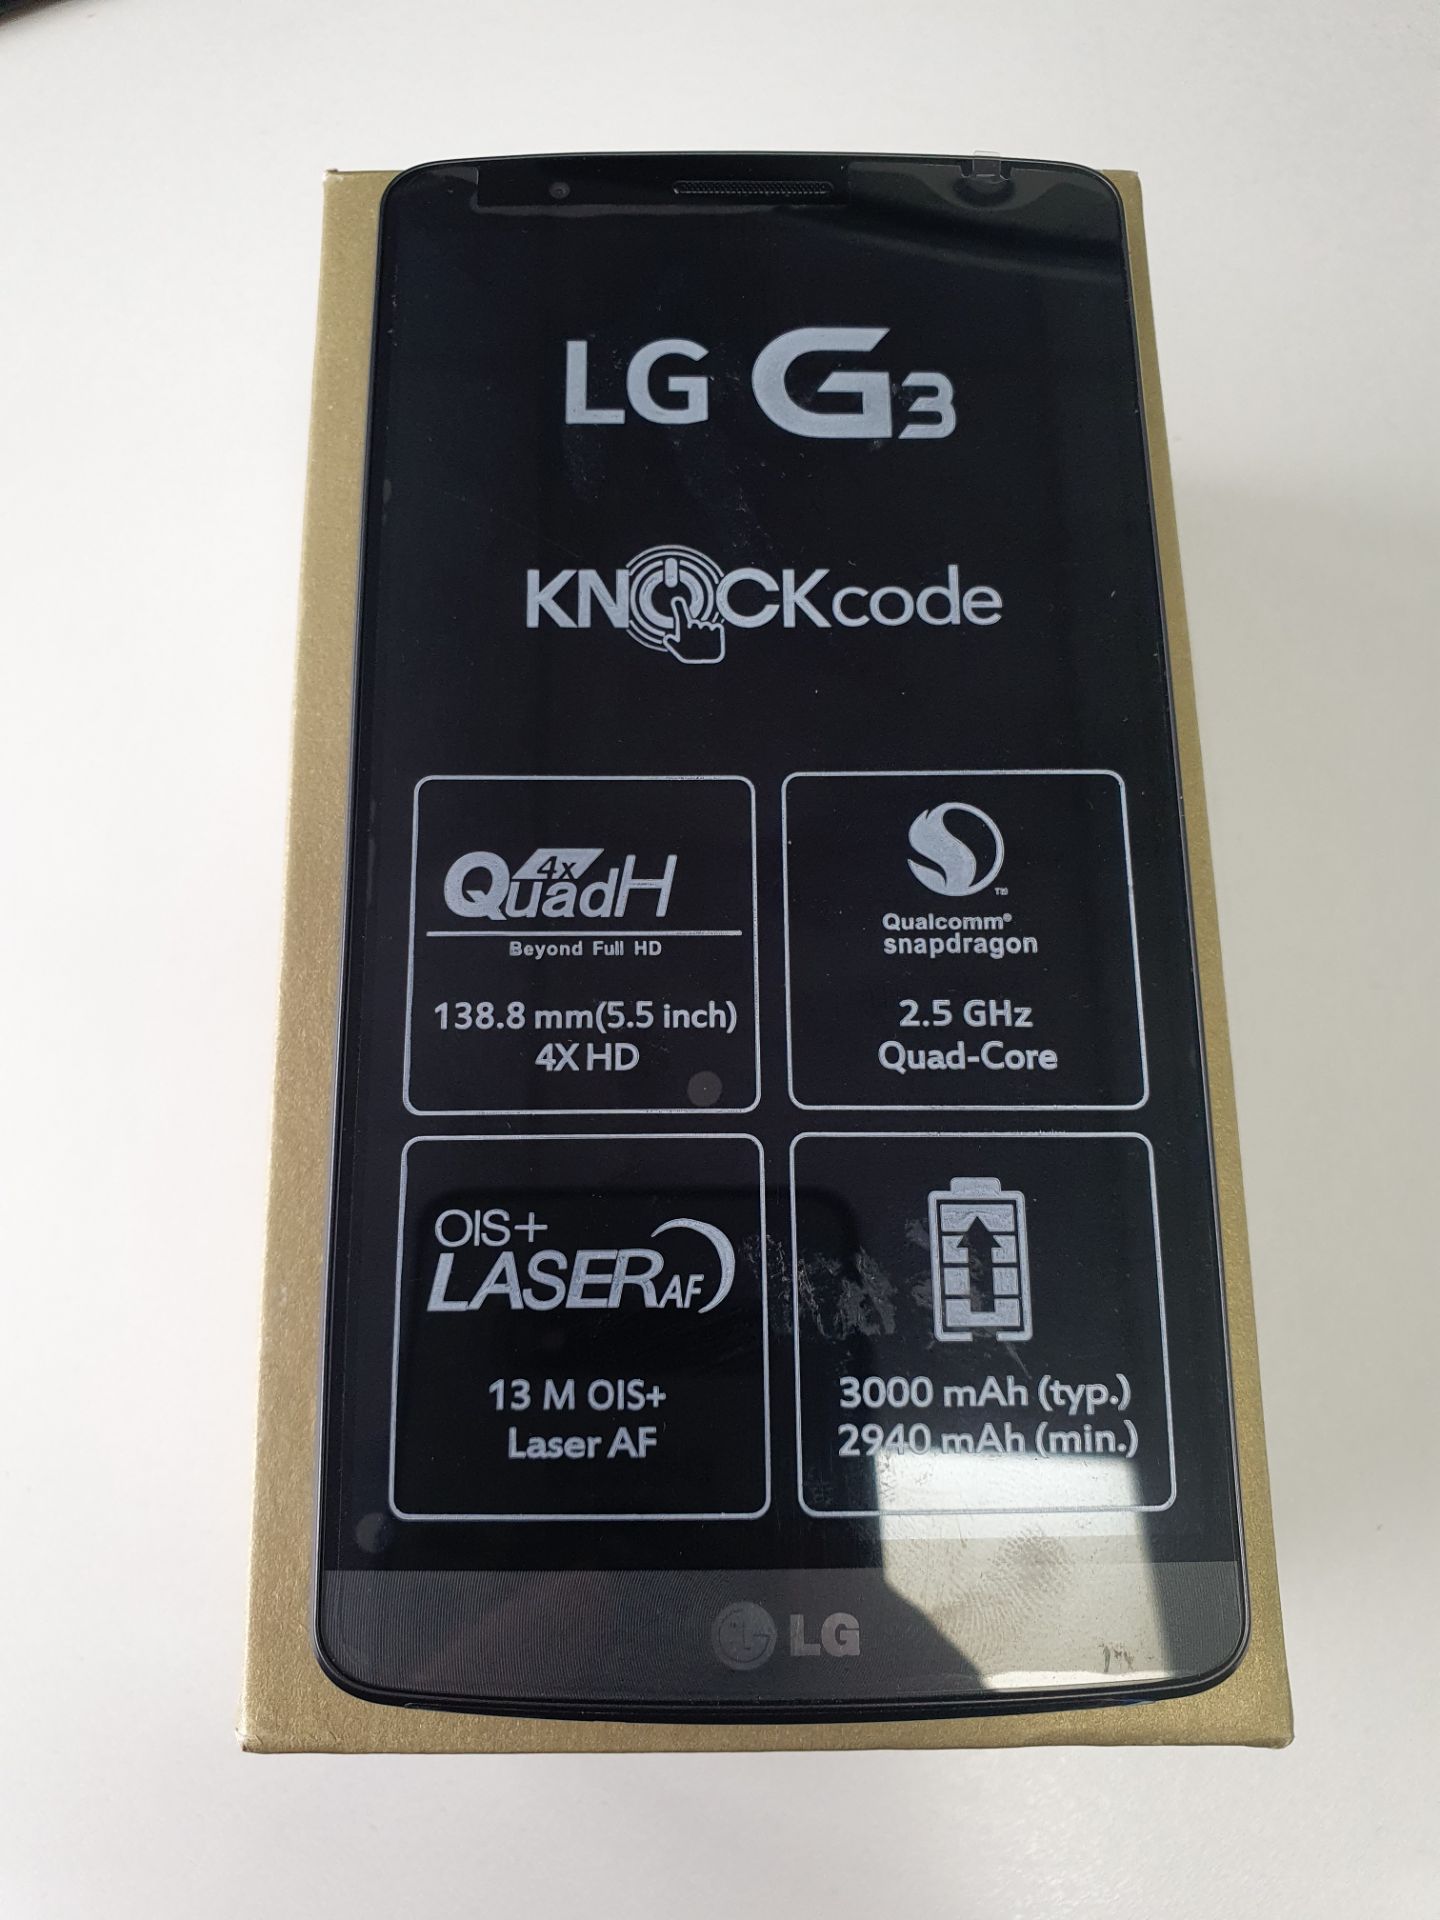 Ex-Display LG G3 Mobile Phone